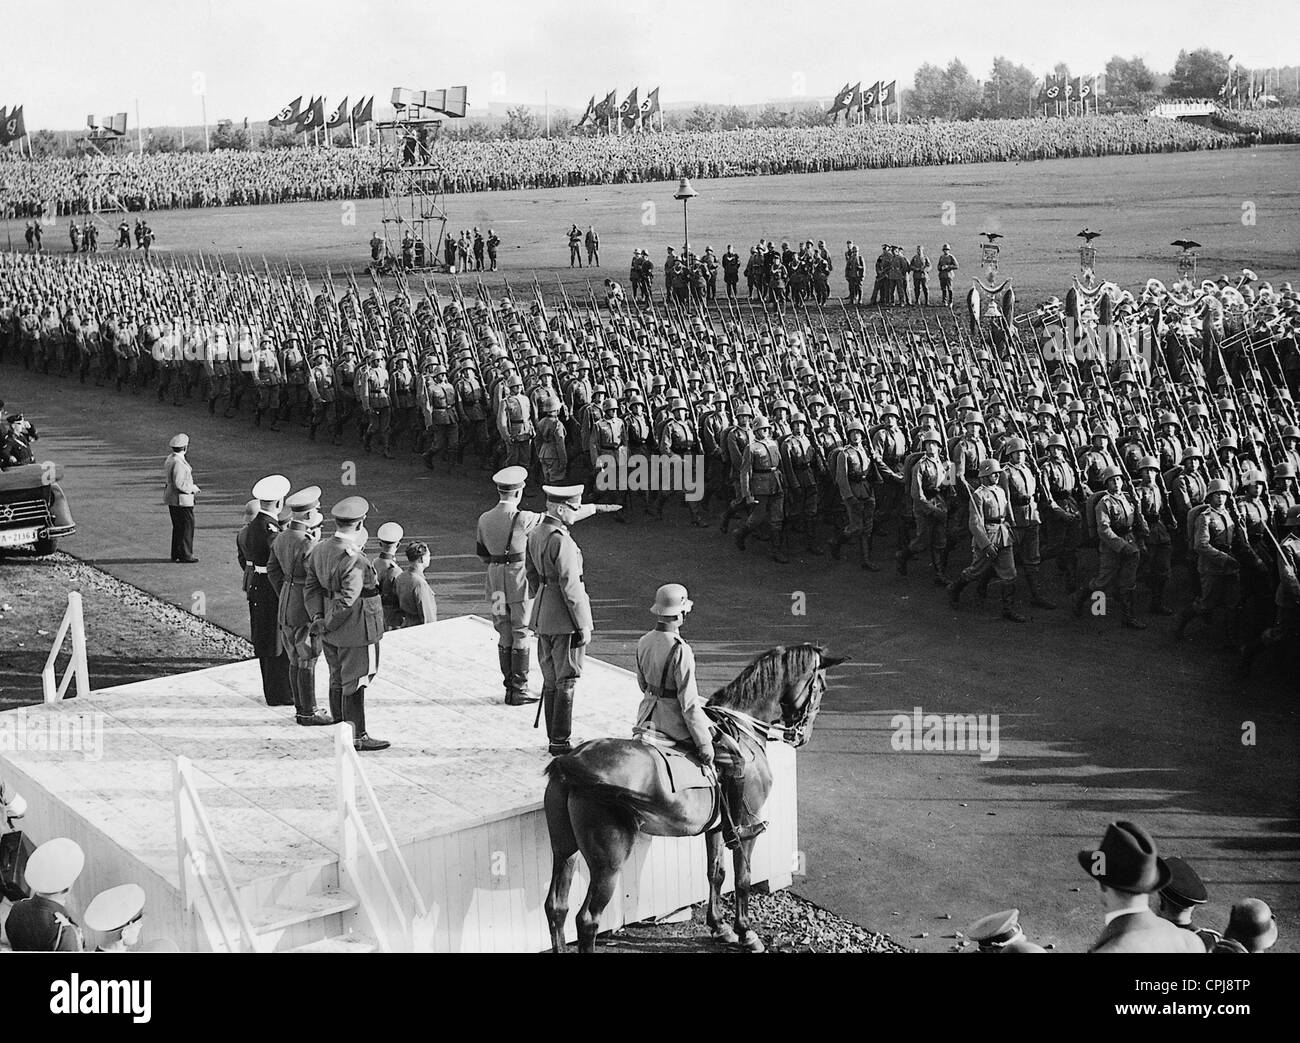 Adolf Hitler Prononcera Une Parade Militaire Sur Le Congres De Nuremberg 1935 Cpj8tp 